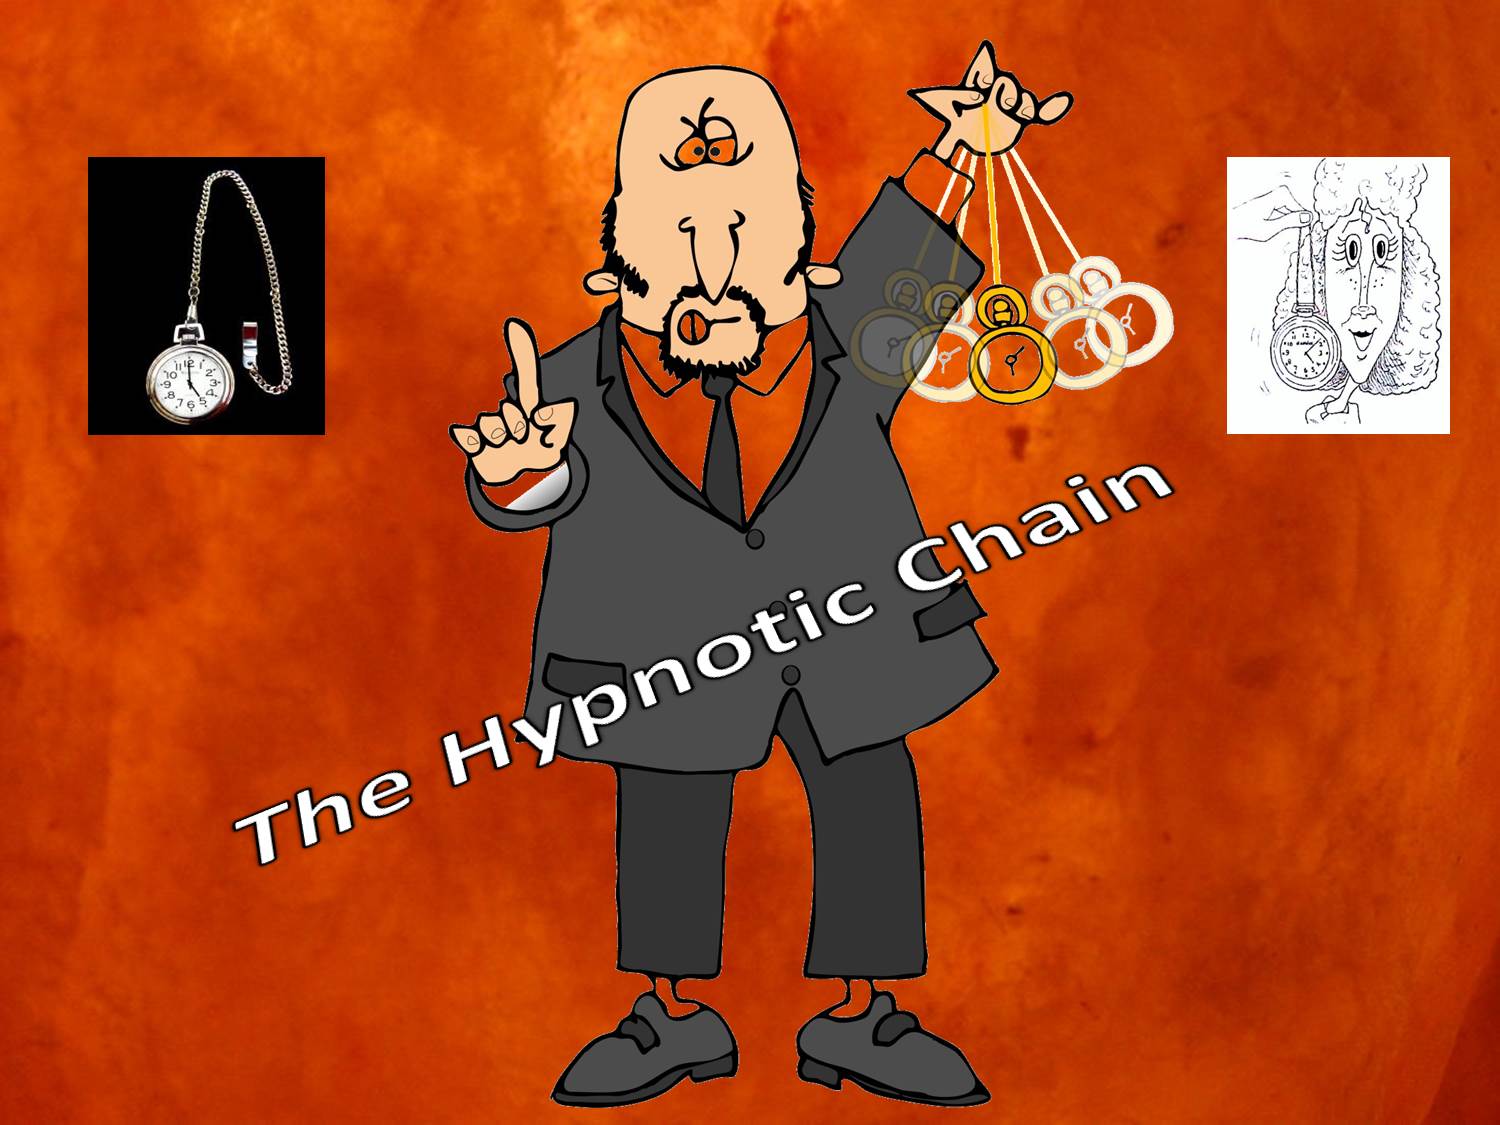 Hypnotic Chain for Blown Away Watch